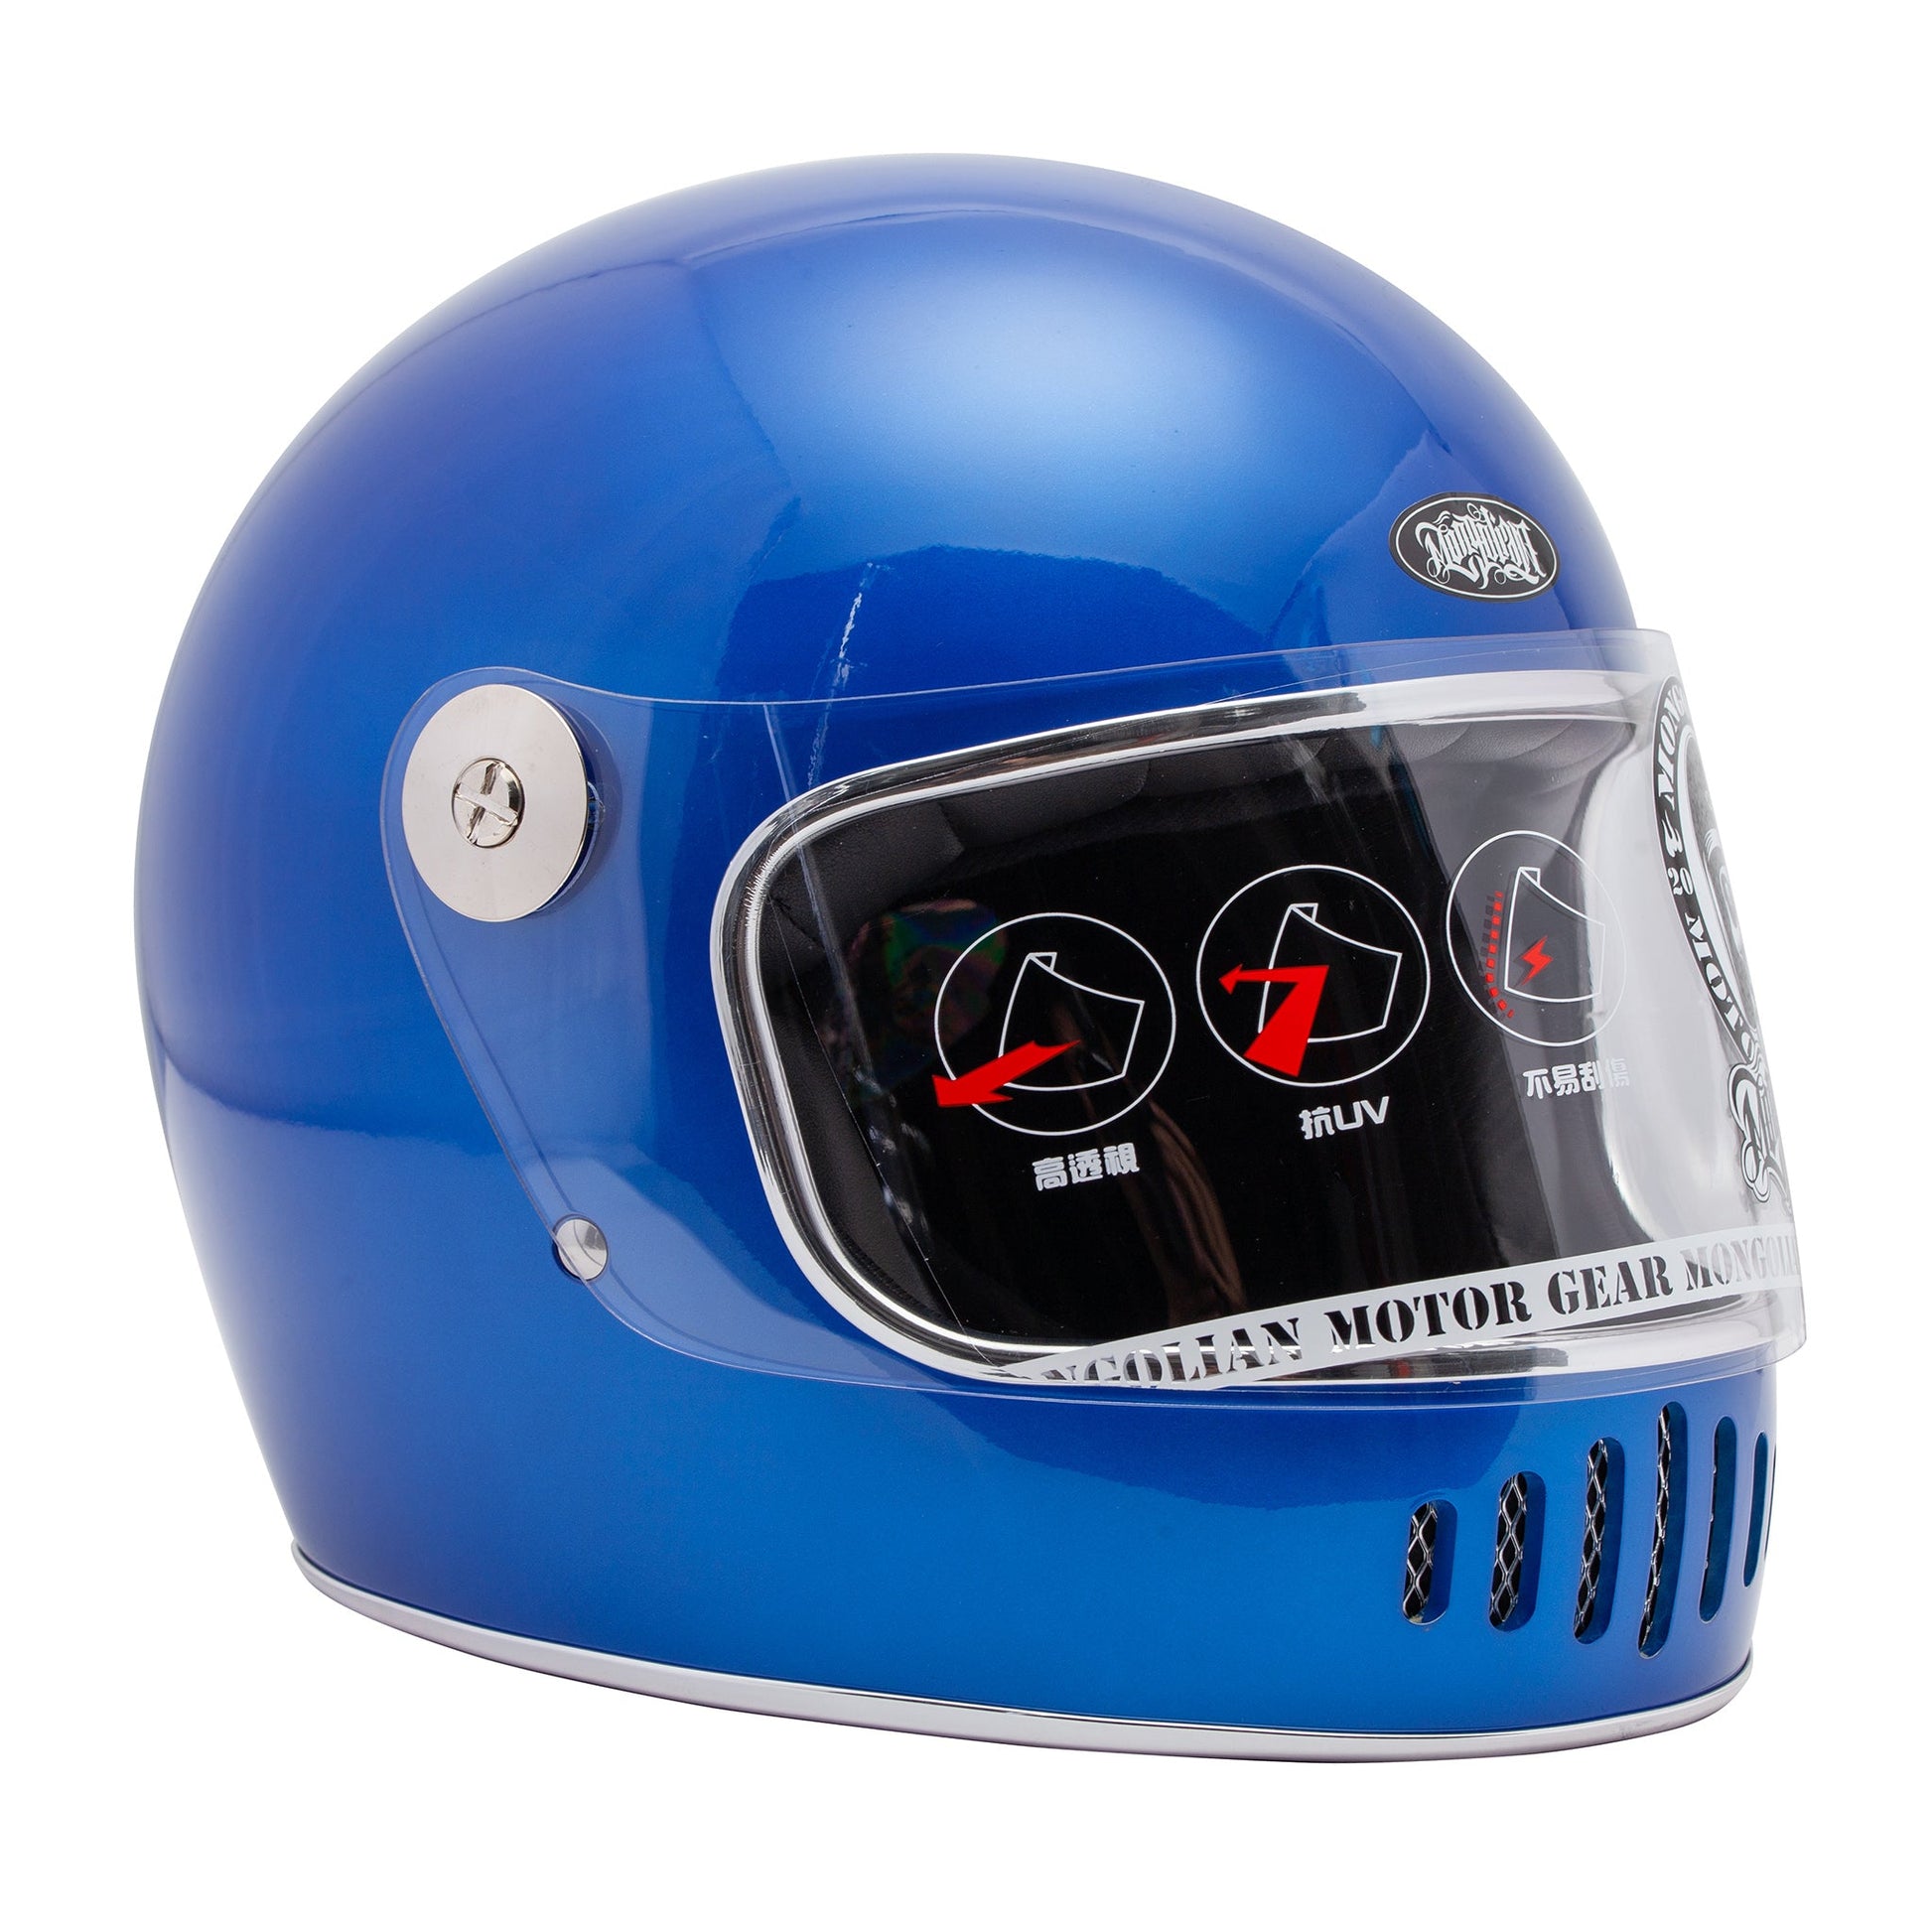 COMET PLANET Helmet - Gloss Blue - Fogy Garage